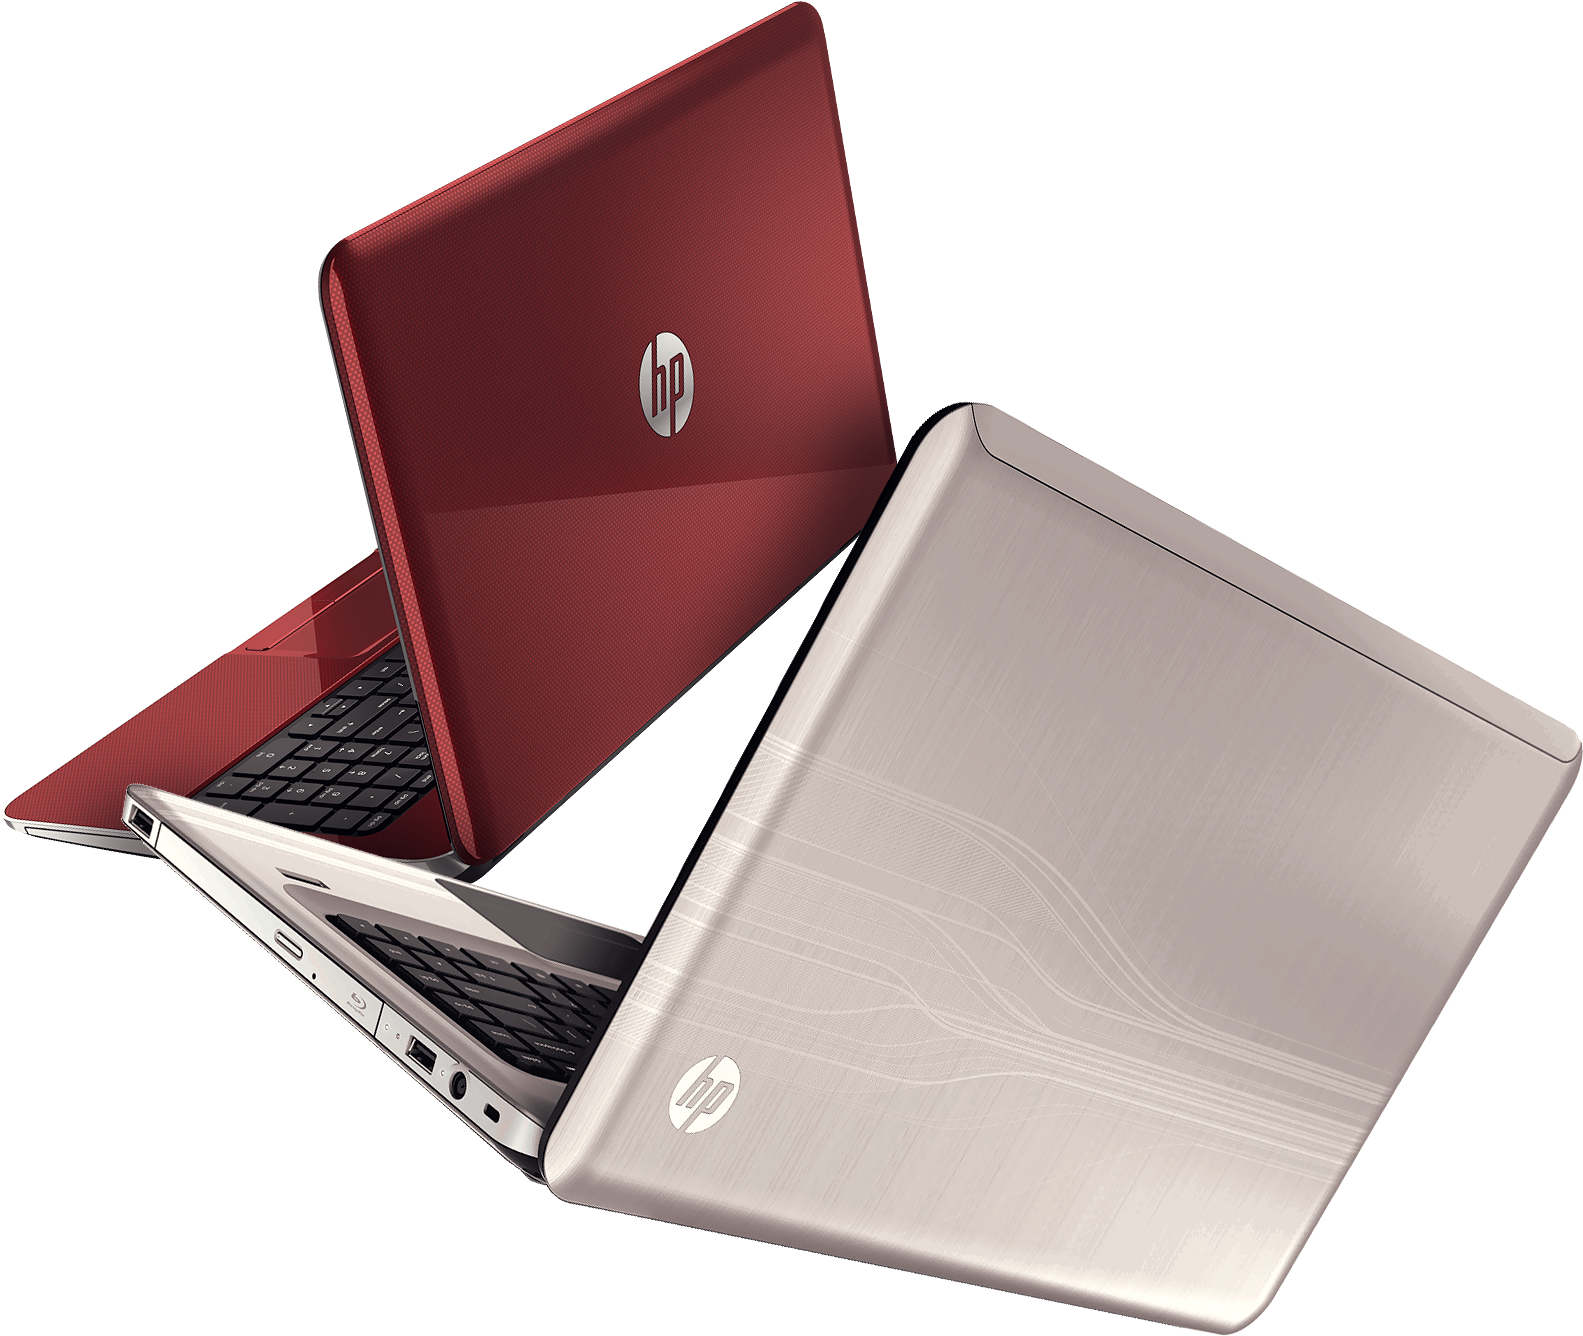 Hp Laptops - Hp 2015 Laptop Models Clipart (1600x1598), Png Download